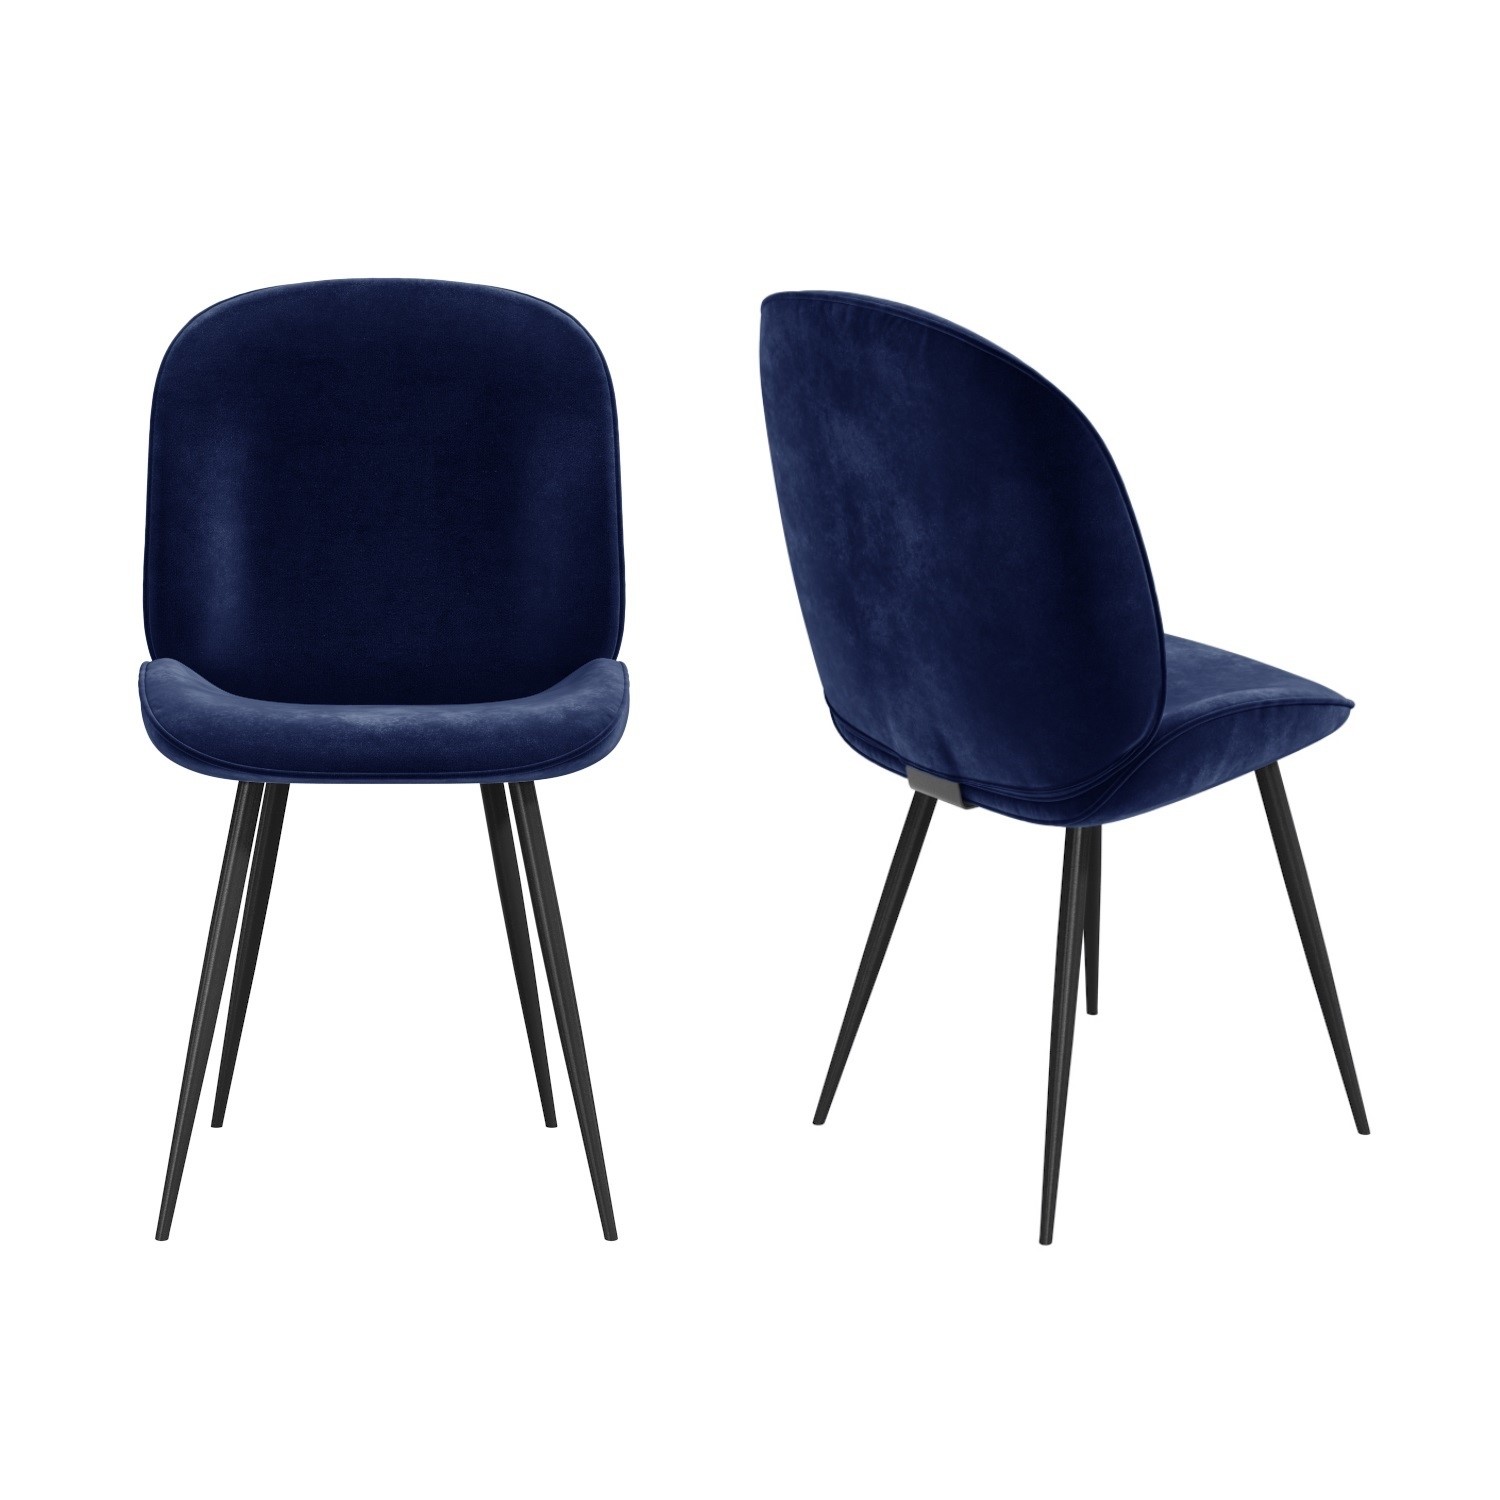 Pair Of Navy Blue Velvet Dining Chairs, Navy Blue Velvet Dining Chairs Uk